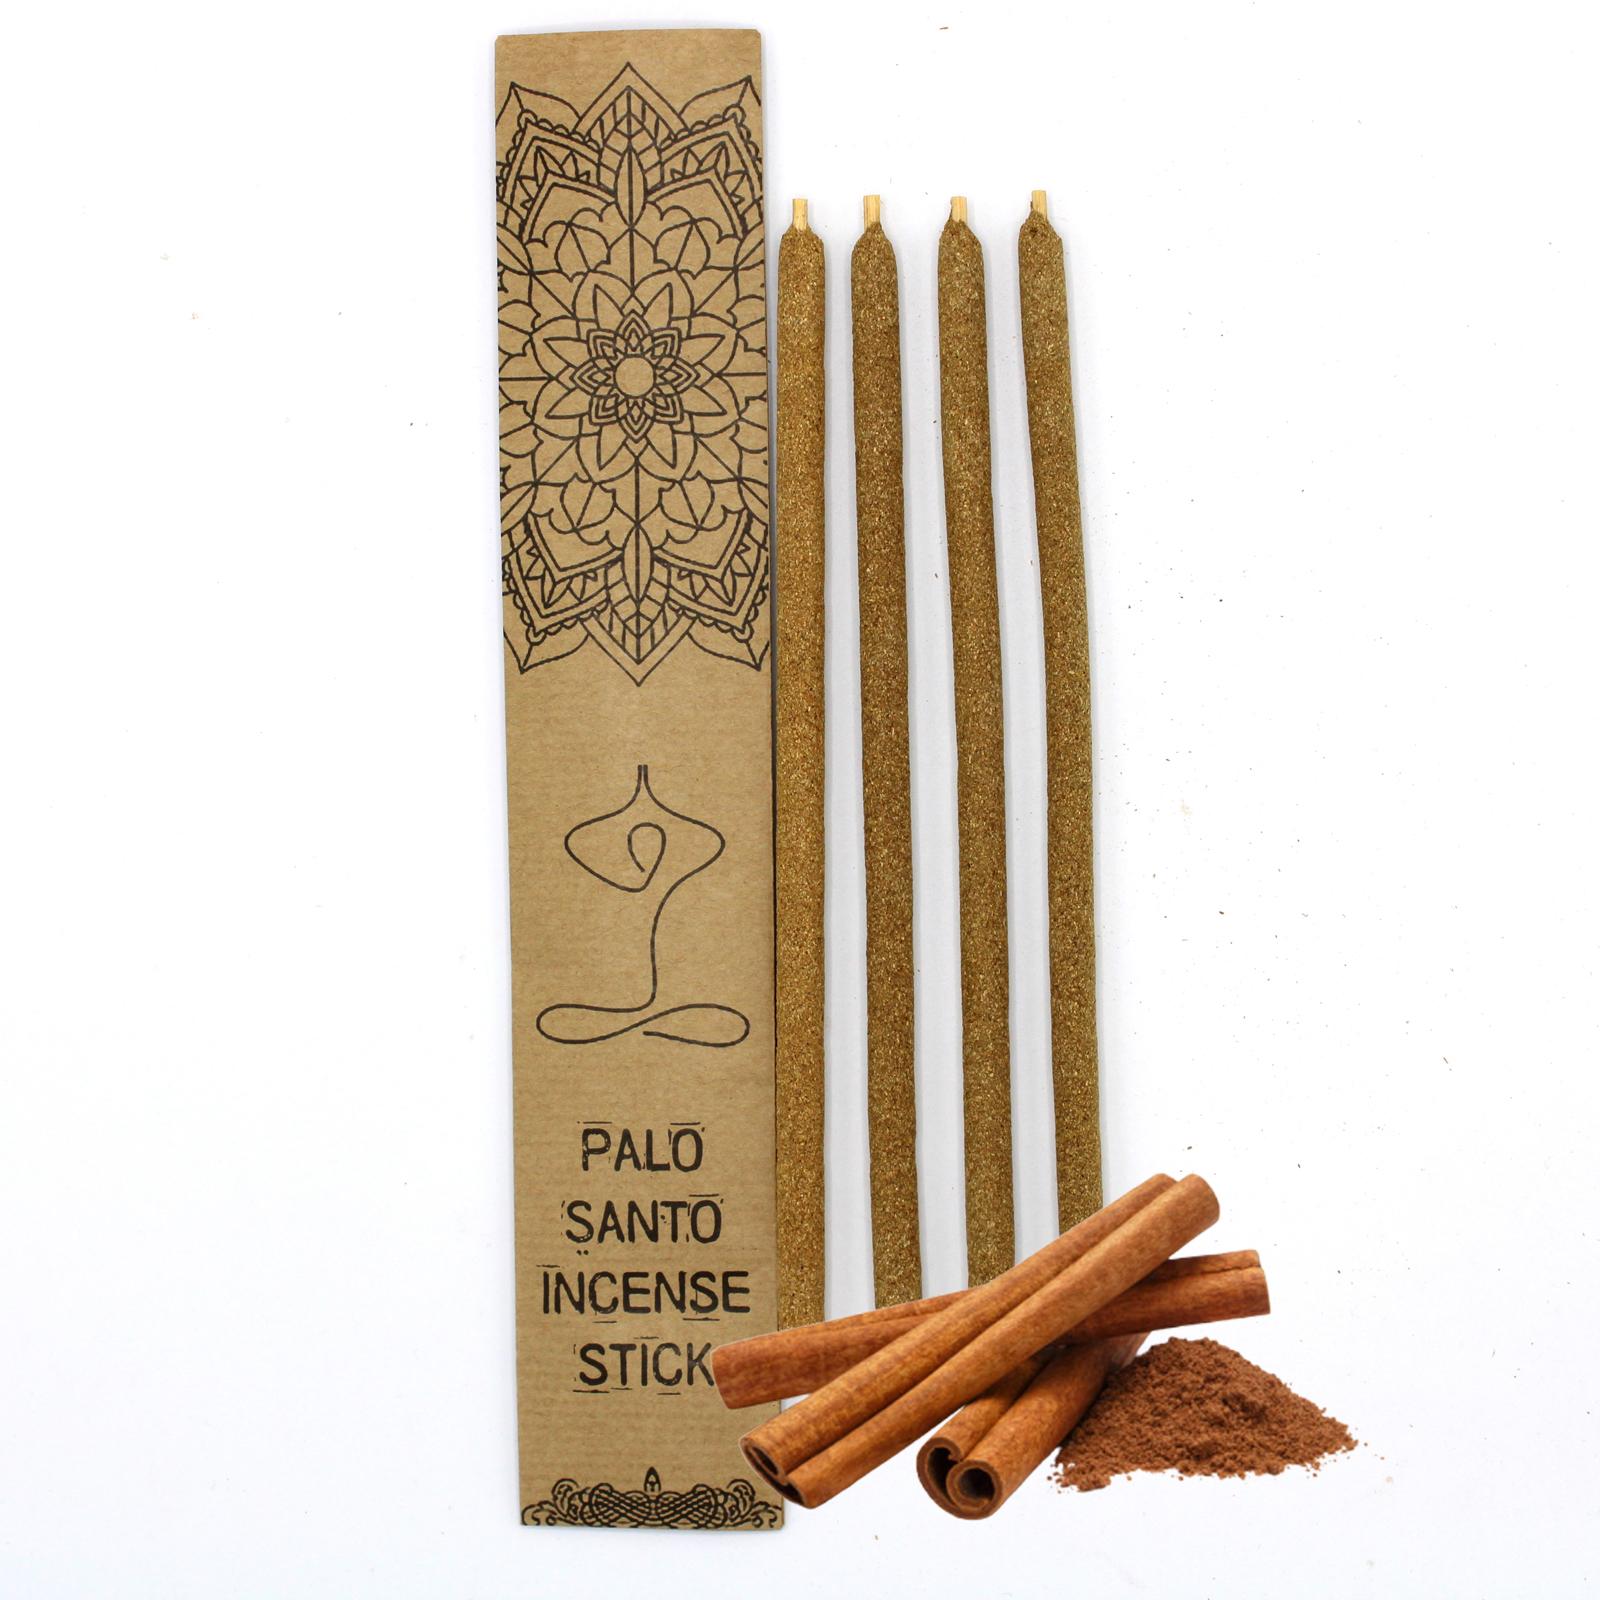 Palo Santo Large Incense Sticks - Cinnamon